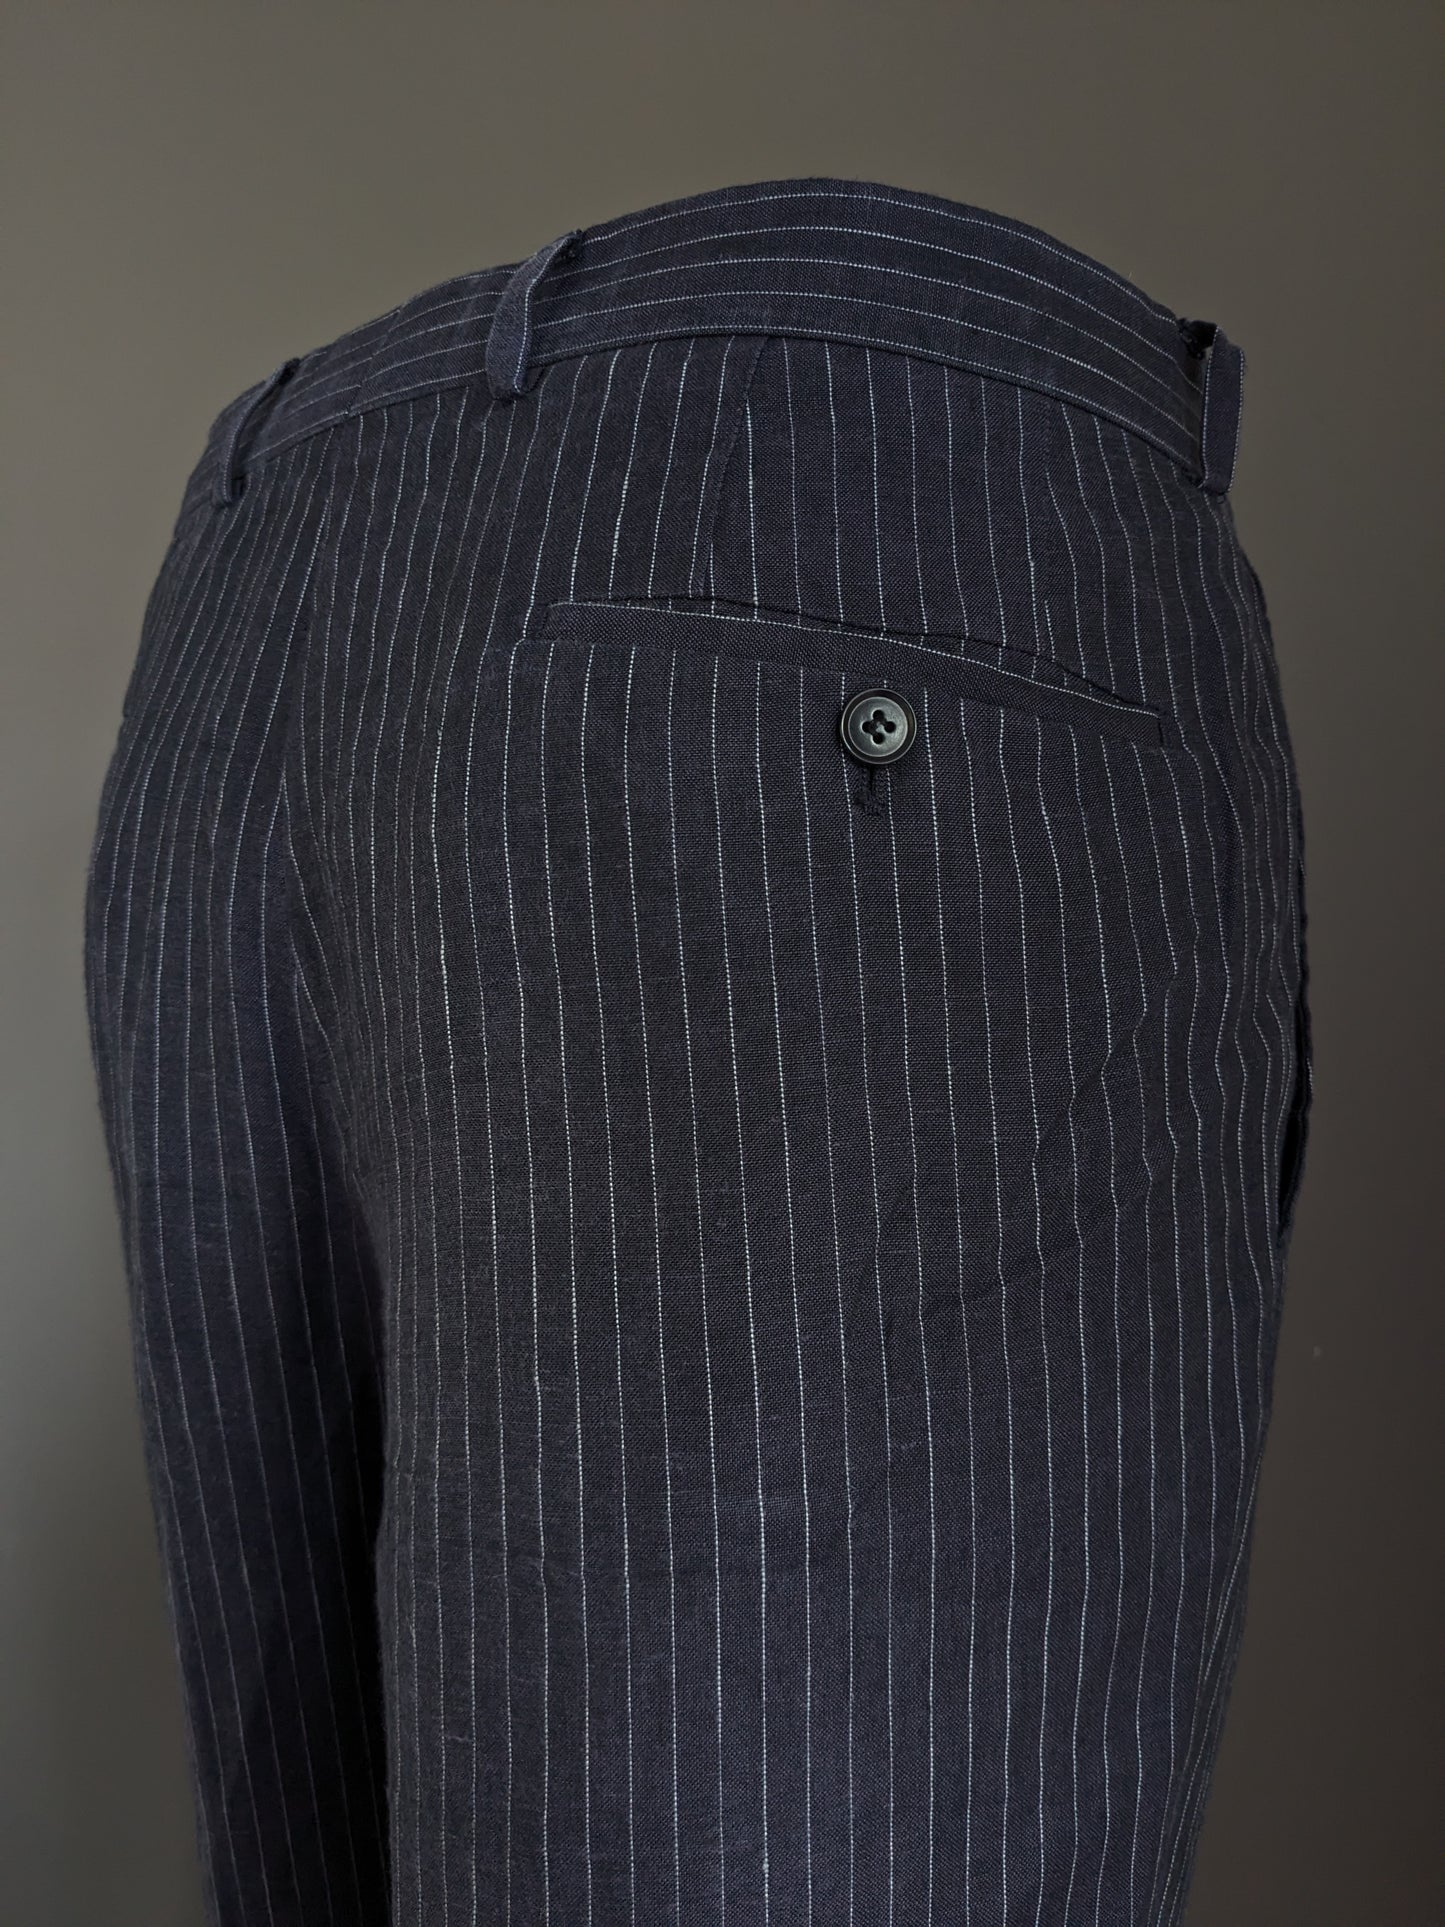 Hugo Boss linen trousers. Blue white striped. Size 52 / L